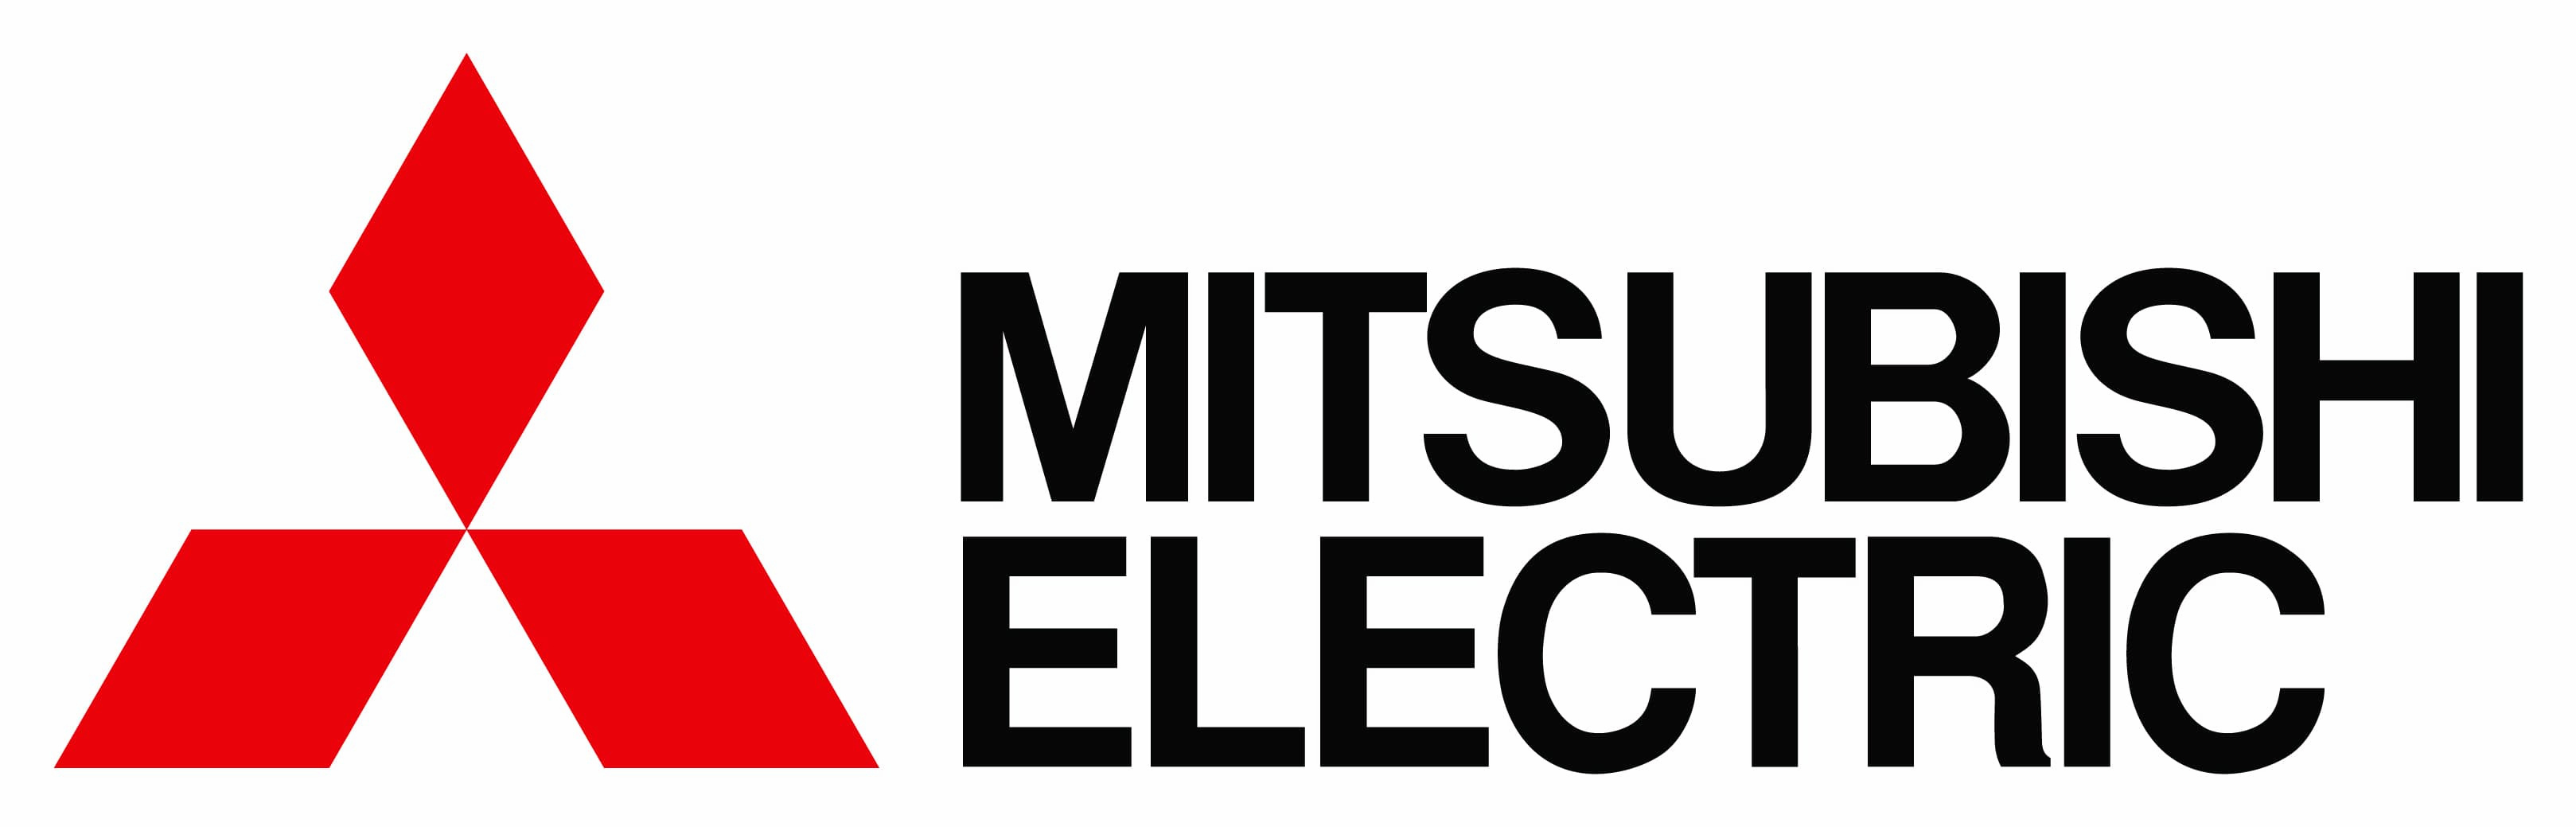 Mitsubishi Electric Logo-1.jpg